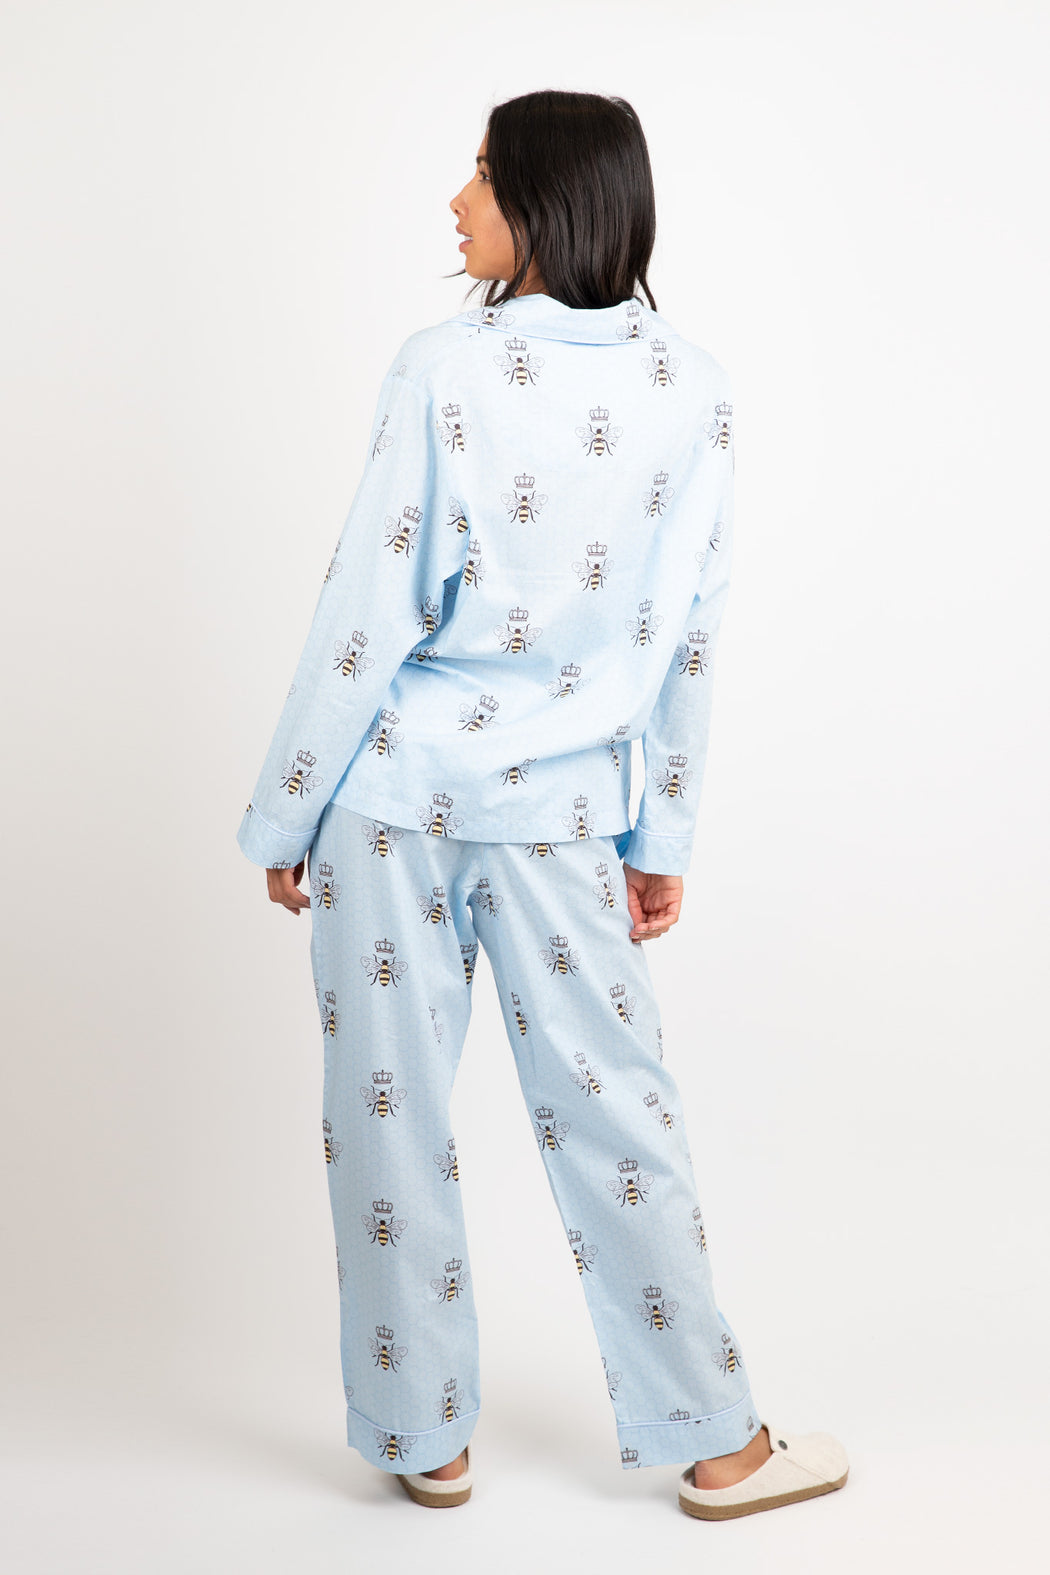 The-Cats-Pajamas-Queen-Bee-PJ-Set-Blue